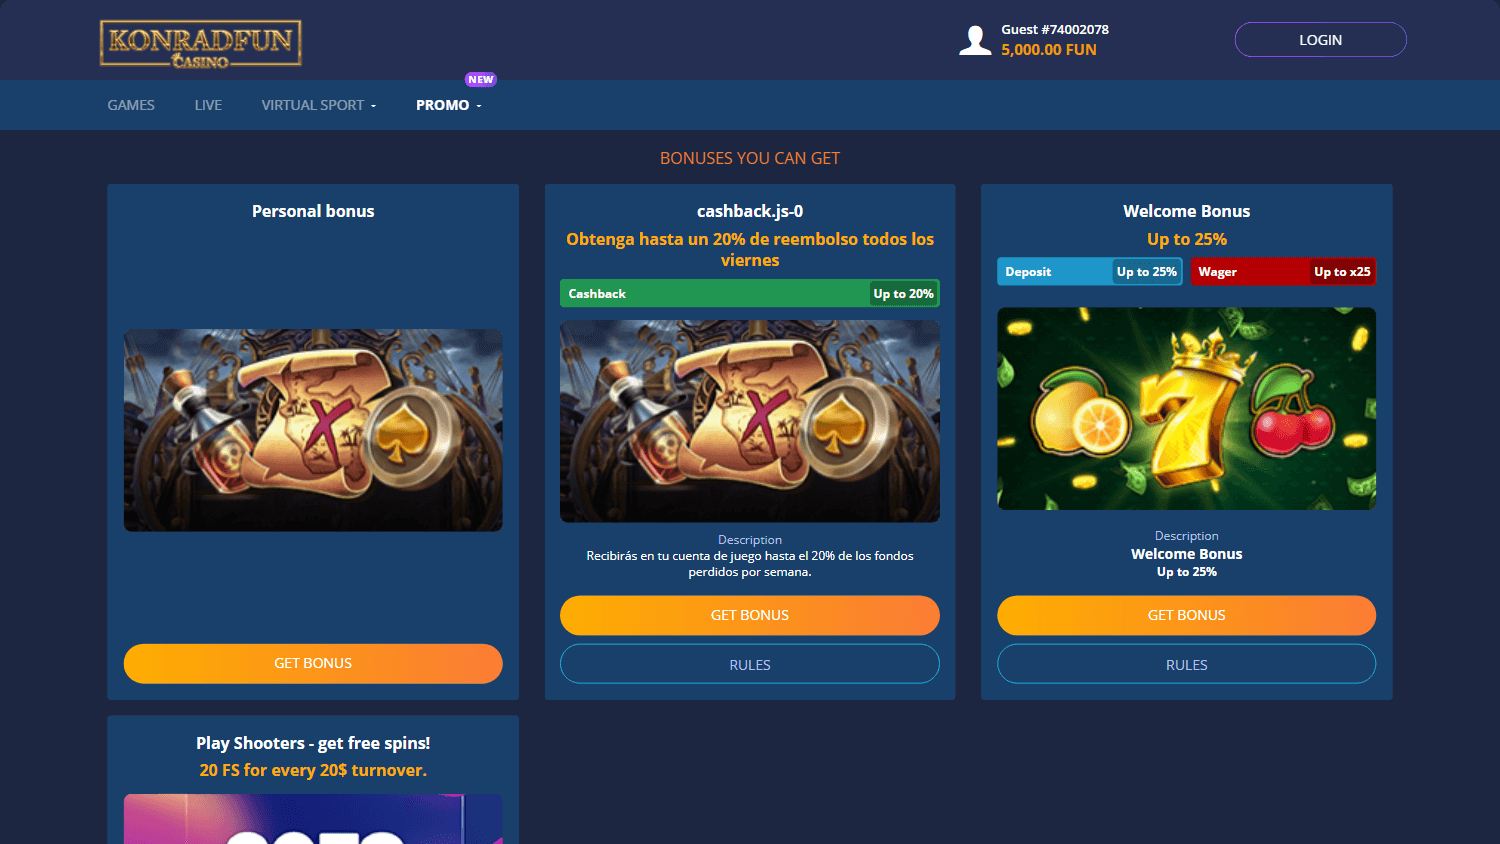 konradfun_casino_promotions_desktop